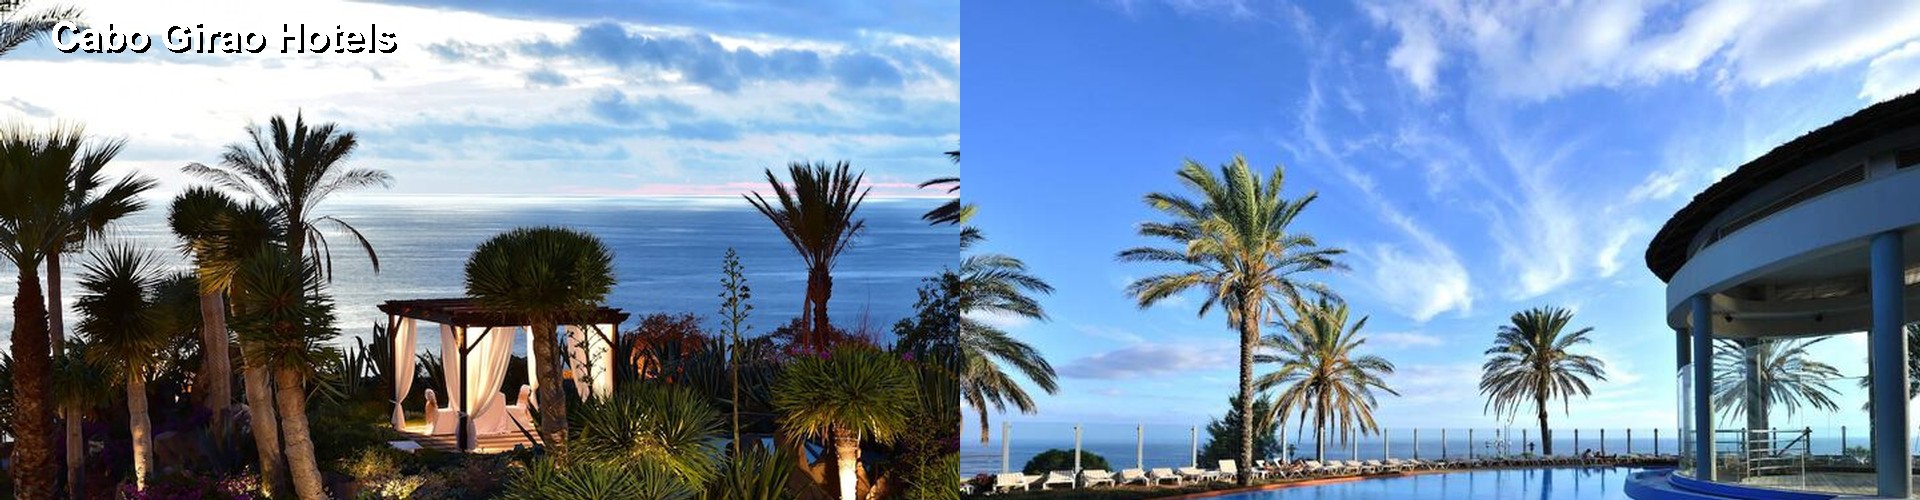 5 Best Hotels near Cabo Girao